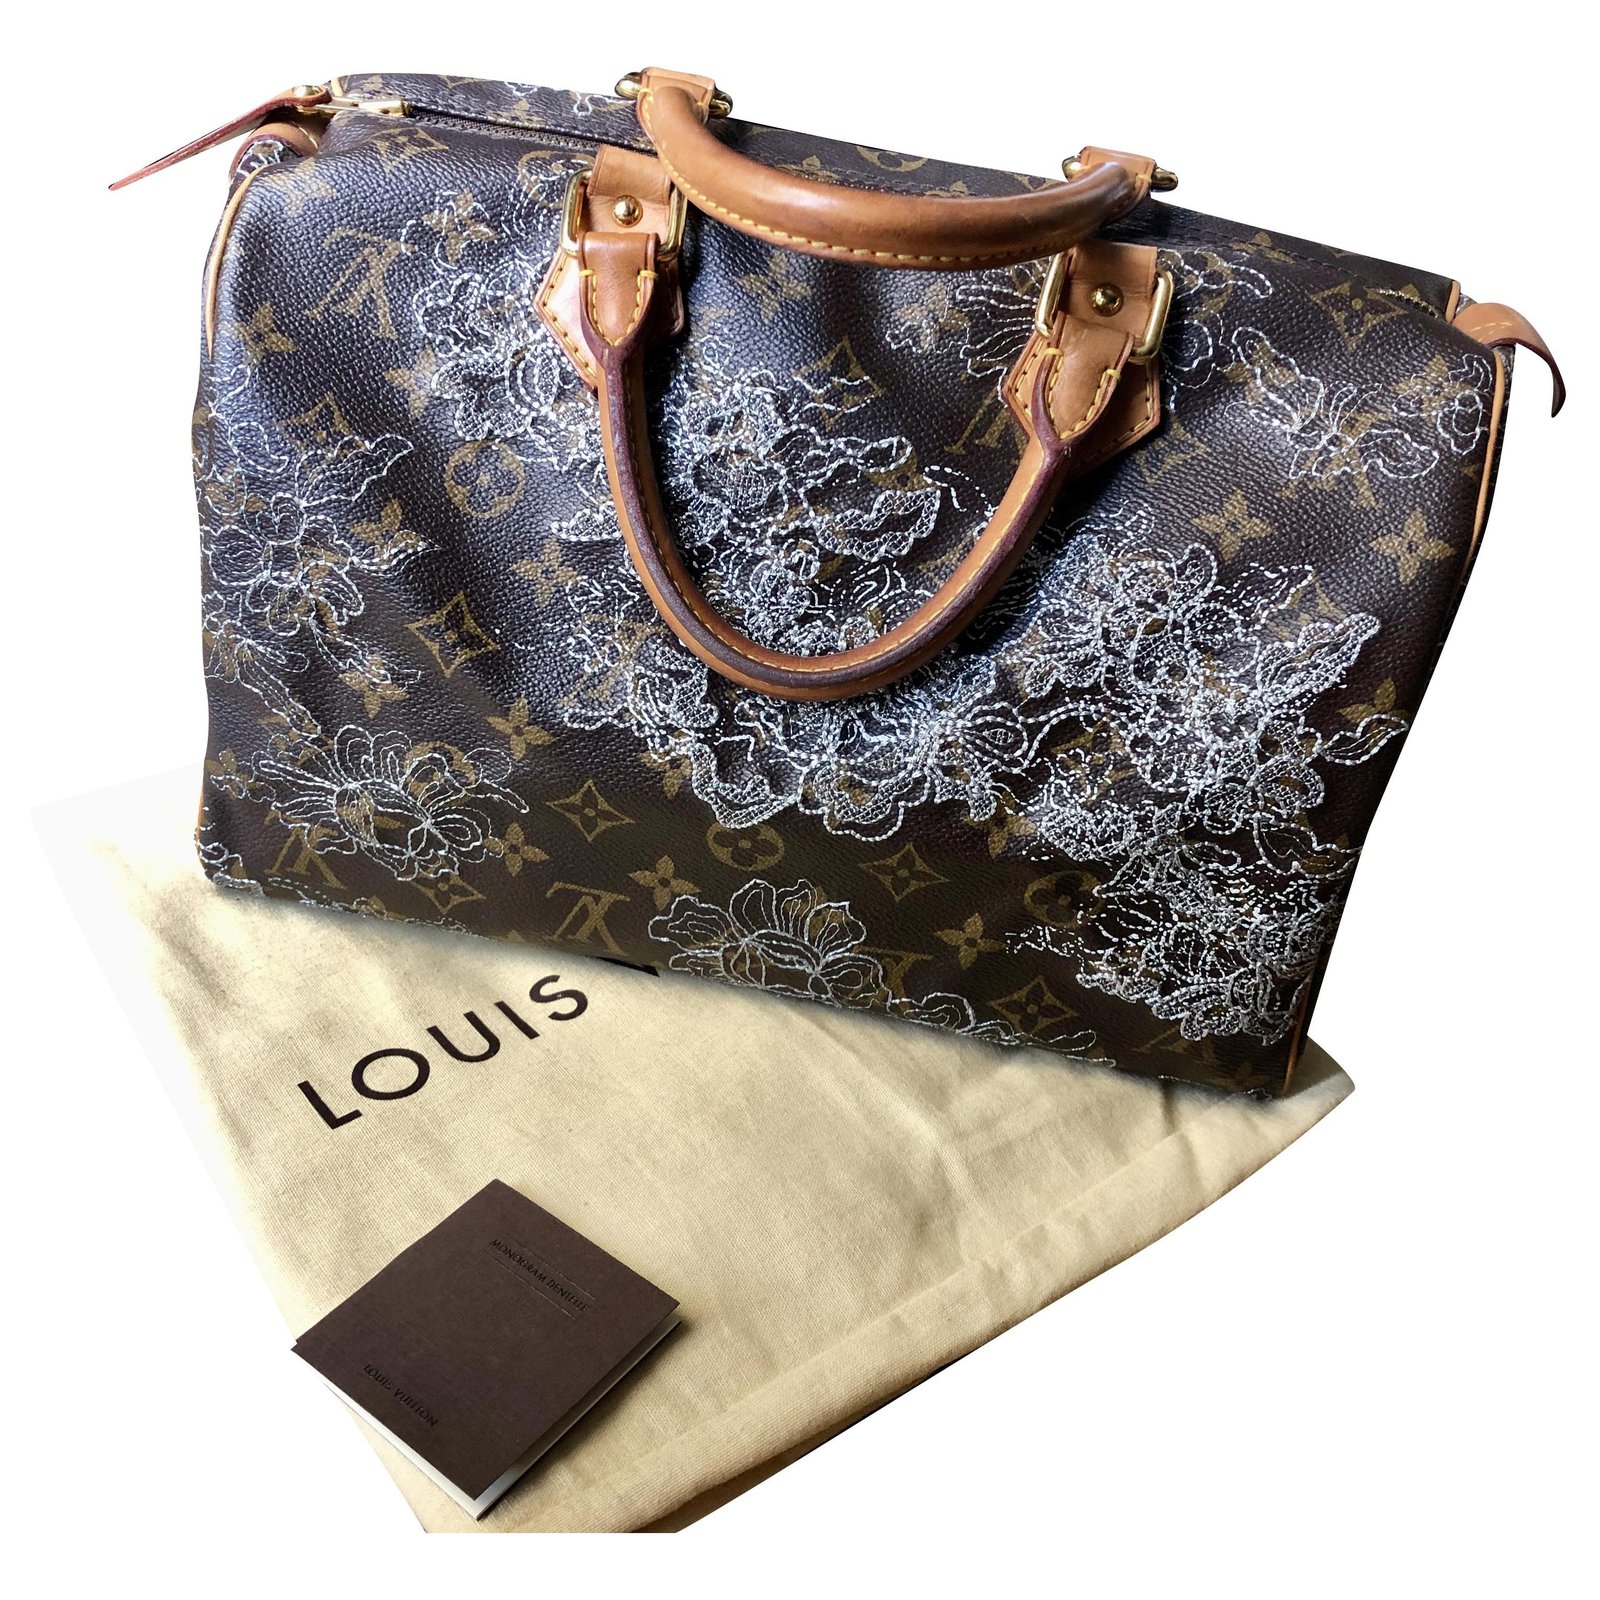 Authentic Louis Vuitton Limited Edition World Tour Speedy Bandouliere Bag   eBay